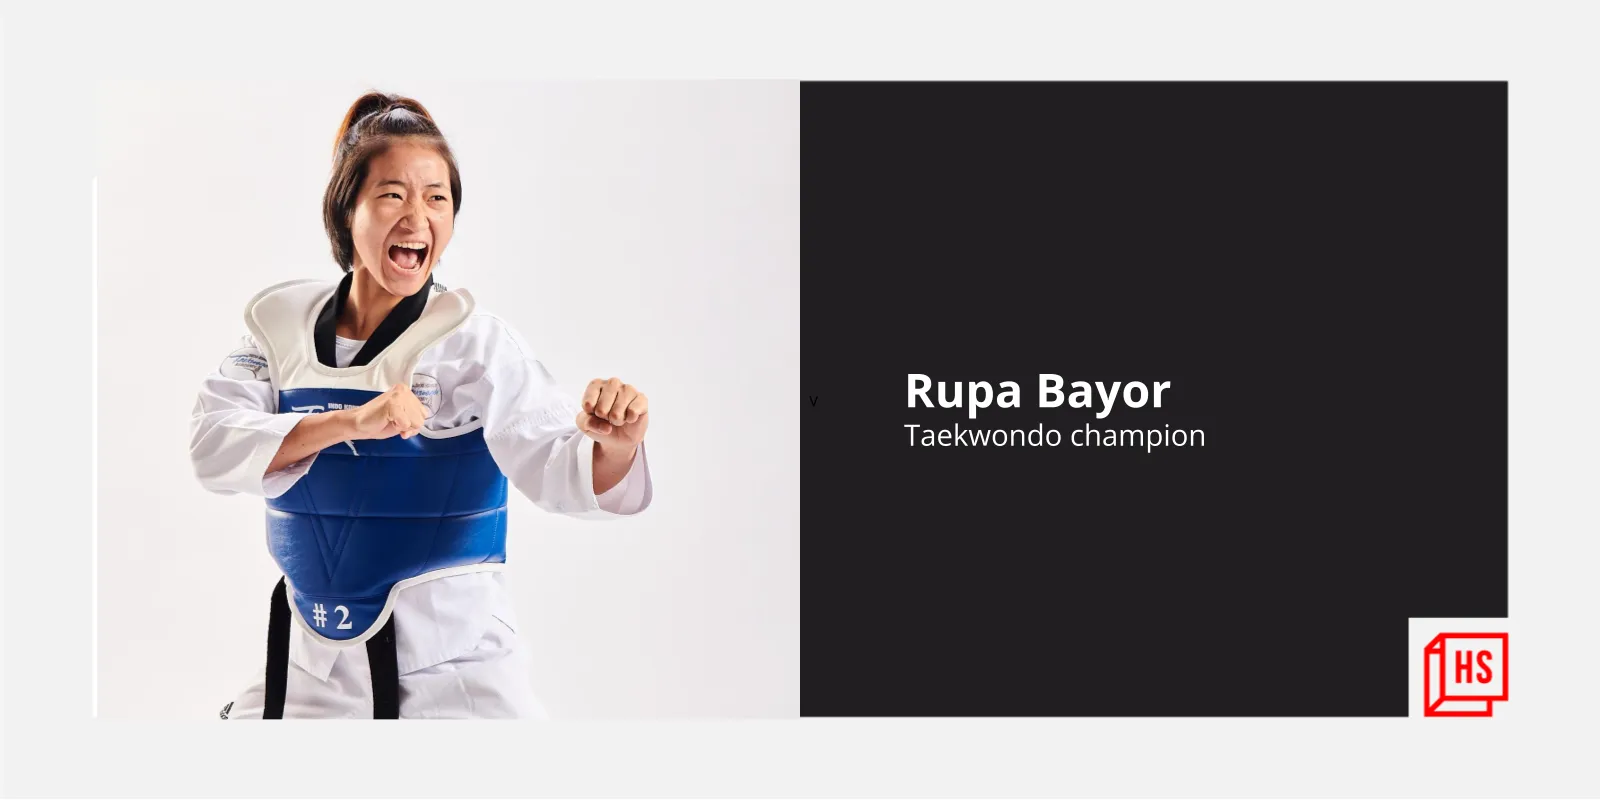 Arunachal Pradesh에서 태권도 기록을 갱신한 챔피언인 Rupa Bayur를 만나보세요.